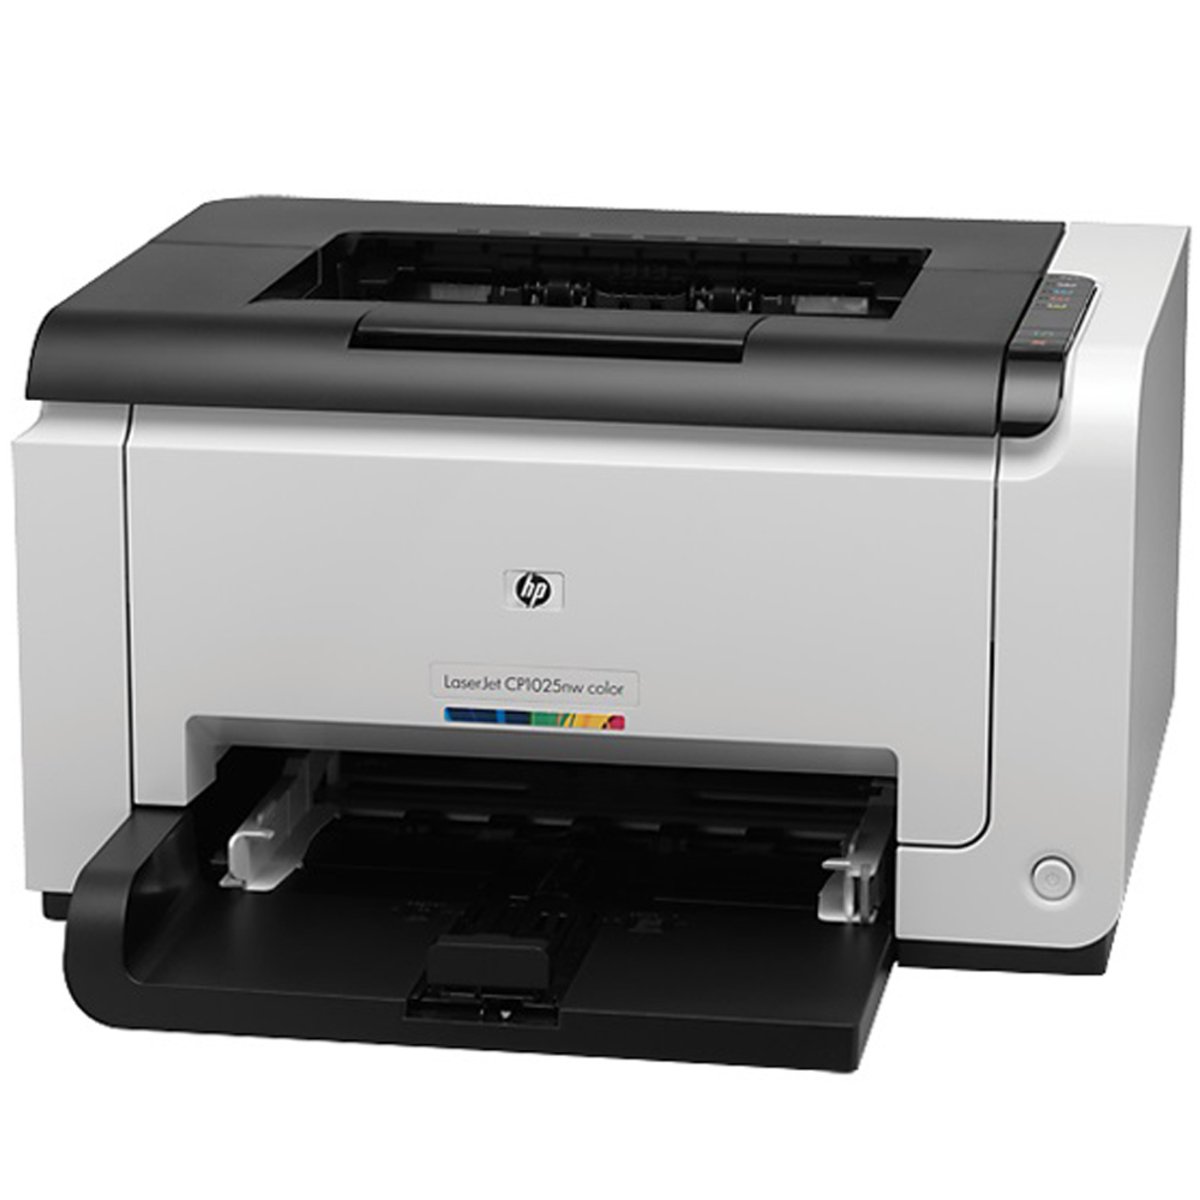 HP Laser Jet Pro Color Printer CP1025nw